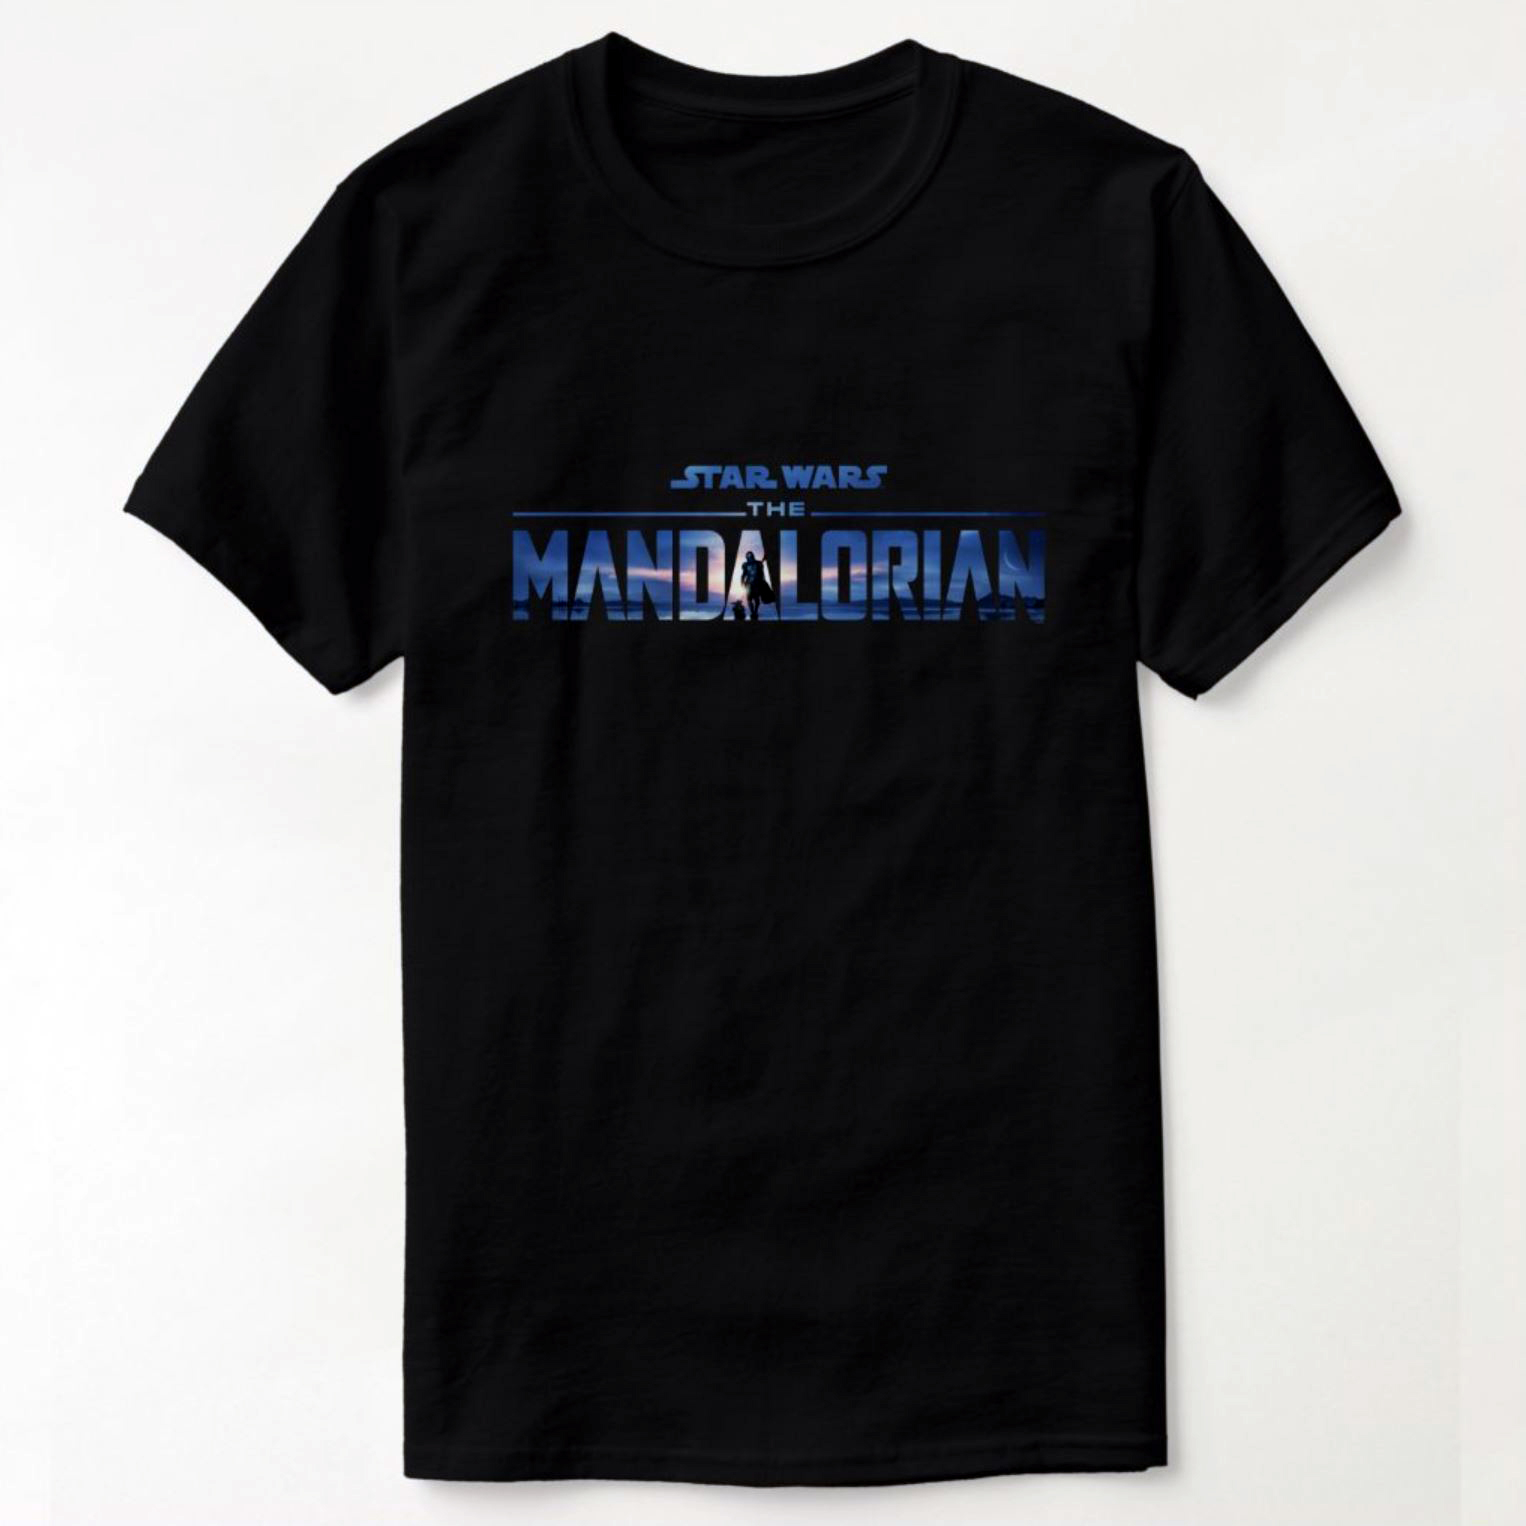 Rebelscum.com: ShopDisney: The Mandalorian Season 2 Merchandise Now Available